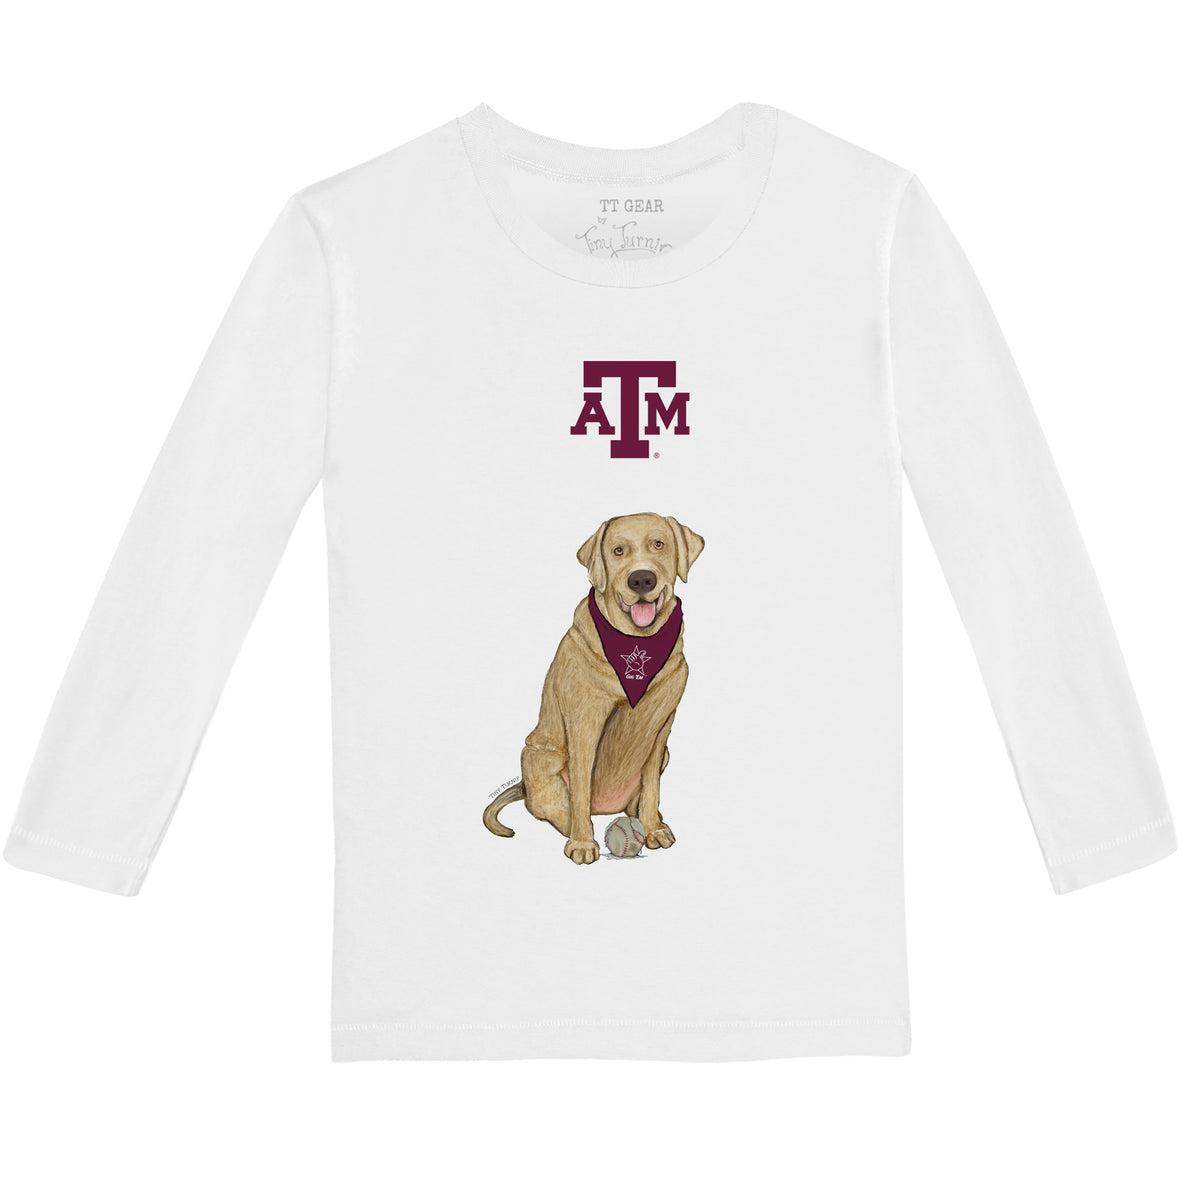 Texas A&M Aggies Yellow Labrador Retriever Long-Sleeve Tee Shirt